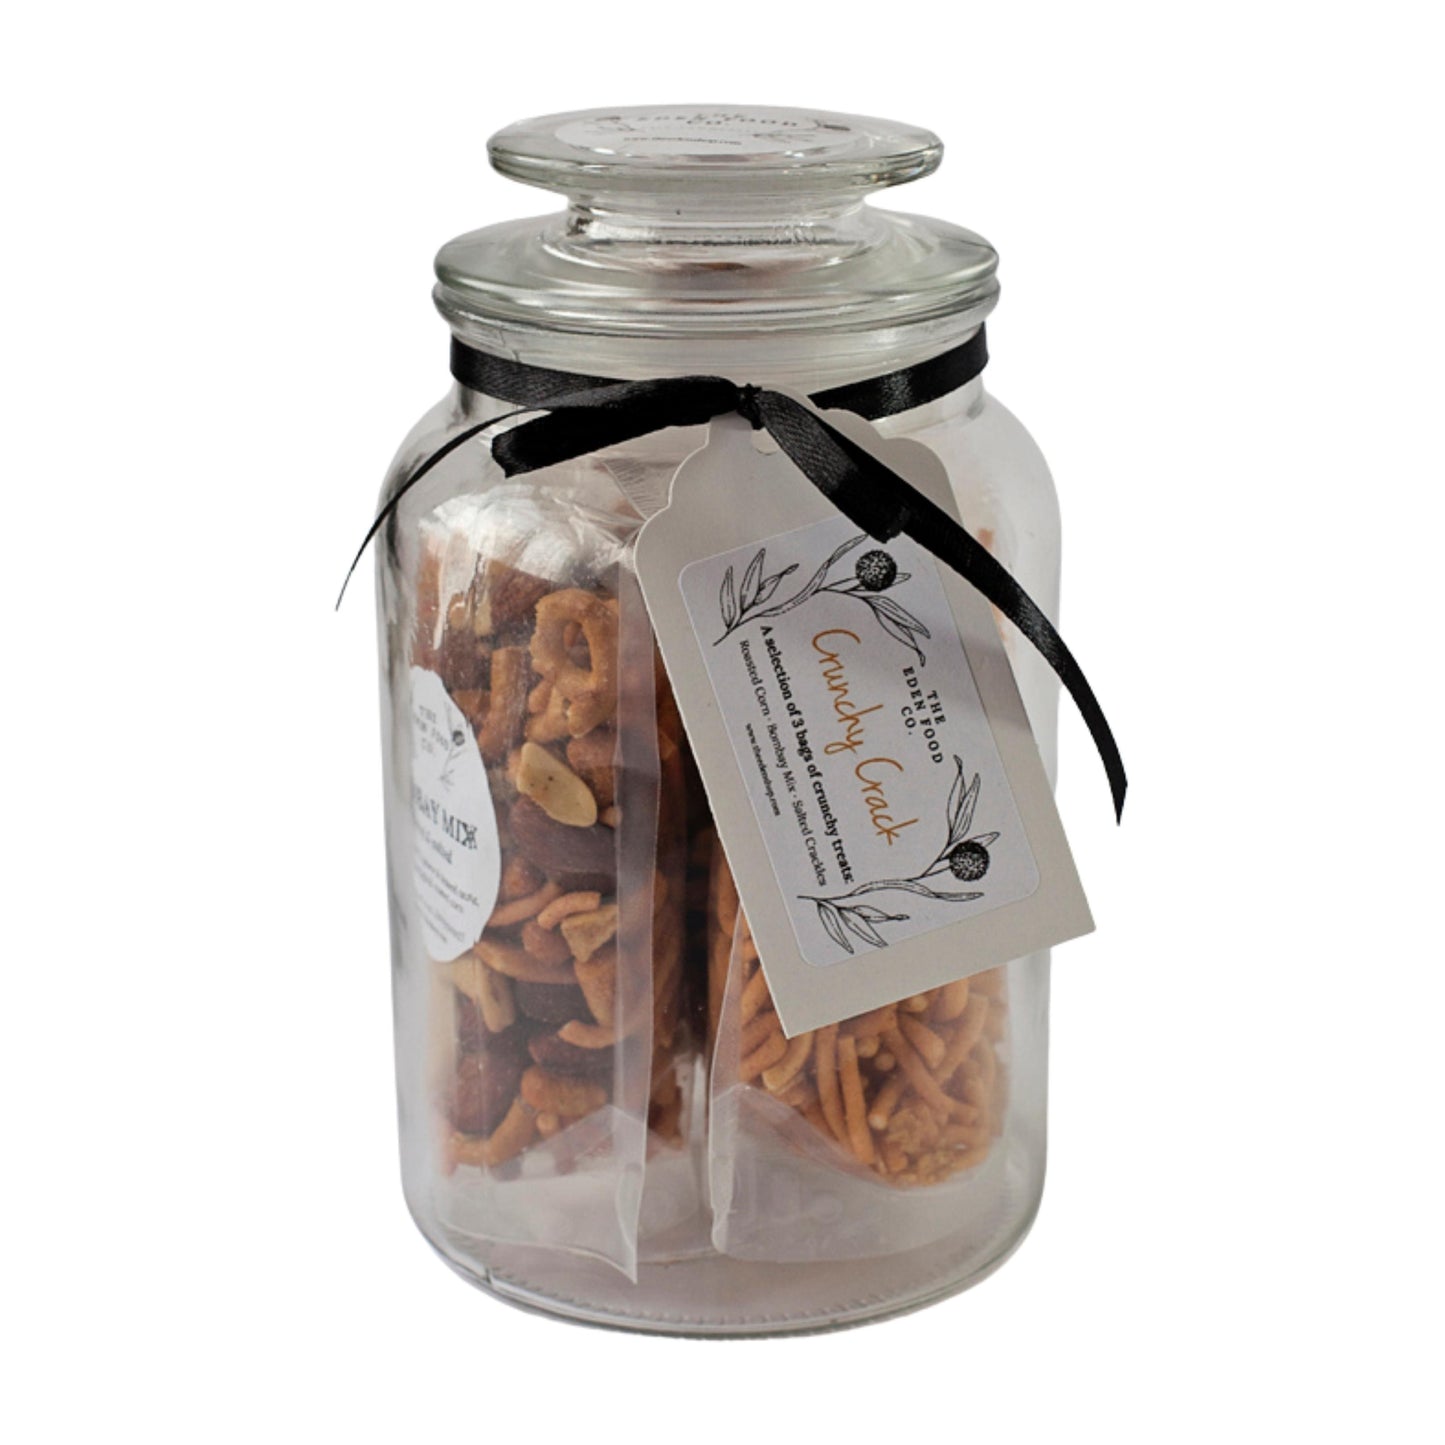 Crunchy Crack Gift Set - Glass Jar filled with Crunchy Treats